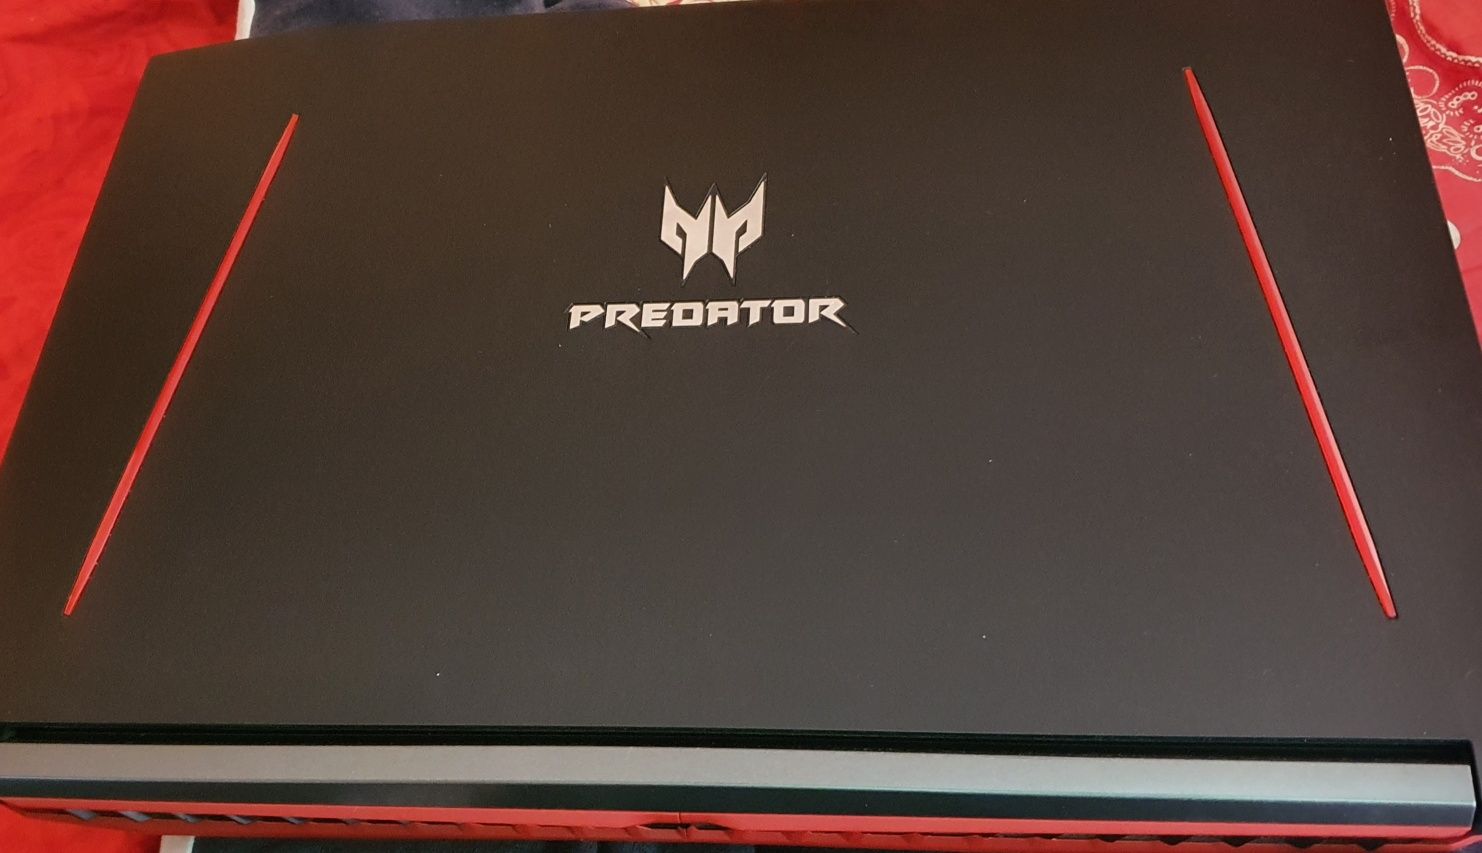 Laptop Acer Predator Helios 300